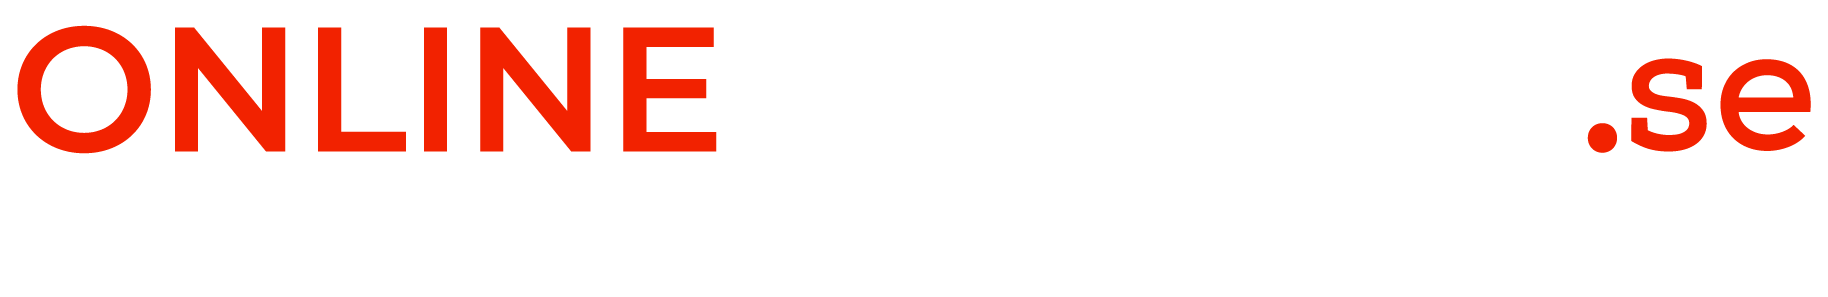 online factory logo